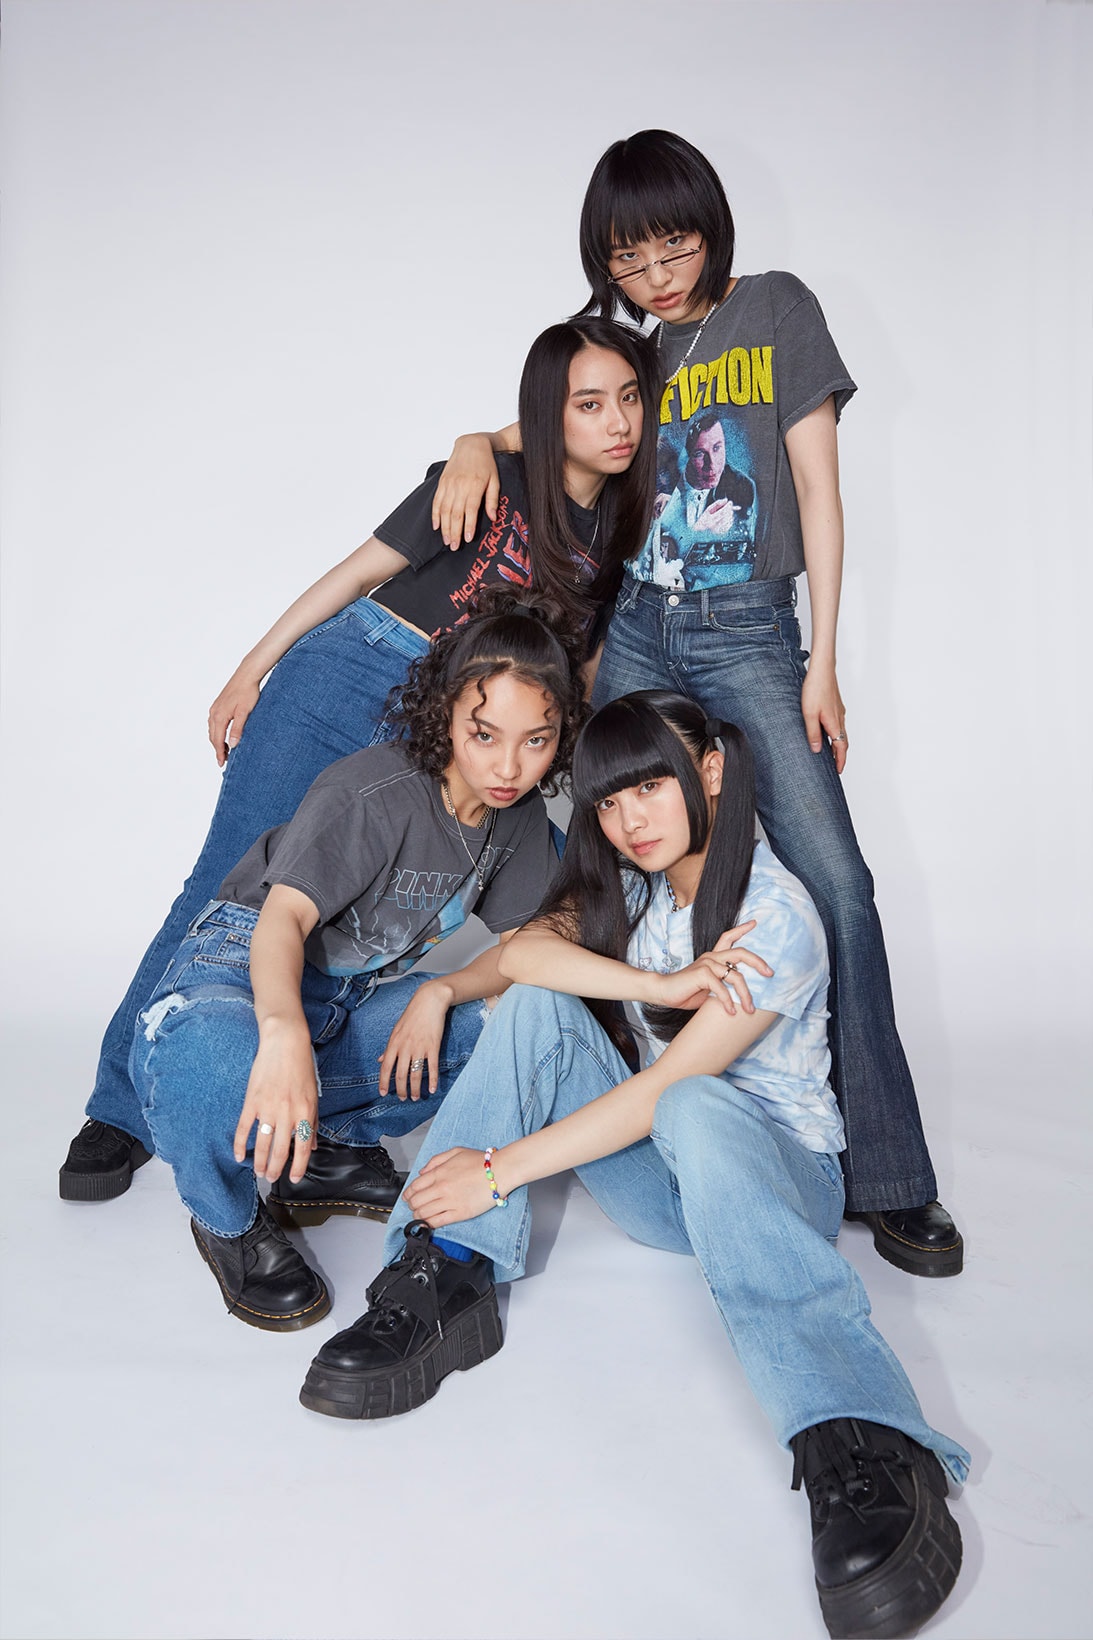 Atarashii Gakko! Japanese J-pop Group 88rising Free Your Mind Pineapple Kryptonite SNACKTIME Interview